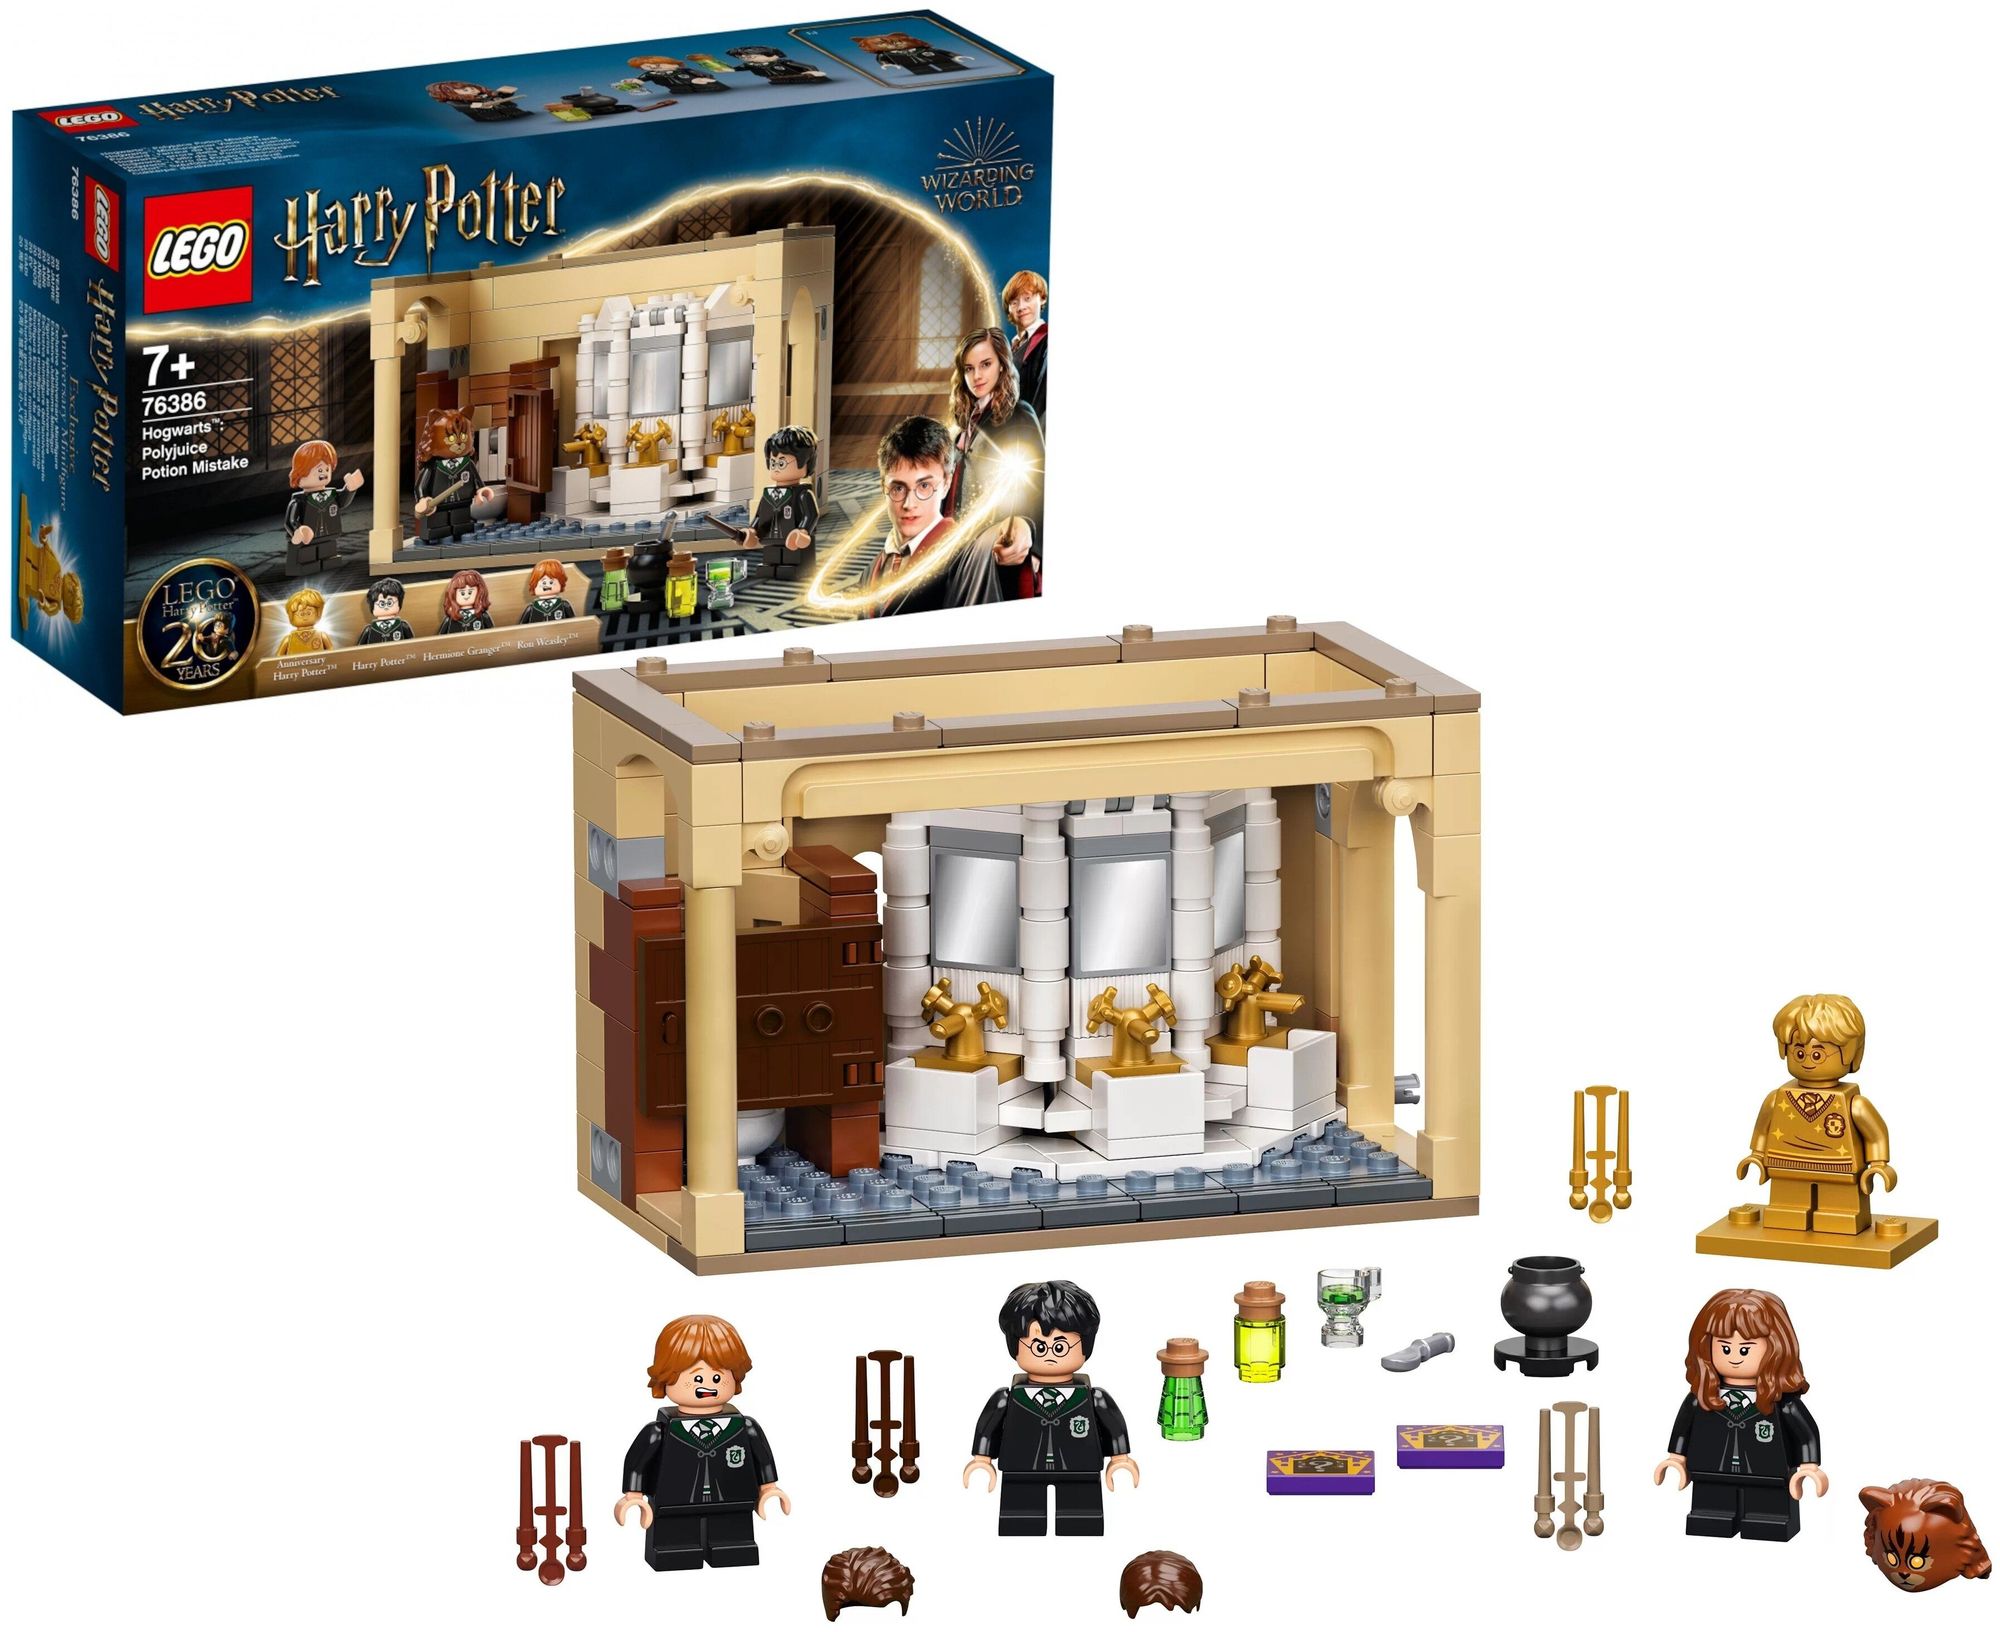 Конструктор Lego Harry Potter Hogwarts: Polyjuice Potion Mistake пластик (76386) конструктор lego harry potter 76389 хогвартс тайная комната 1176 дет